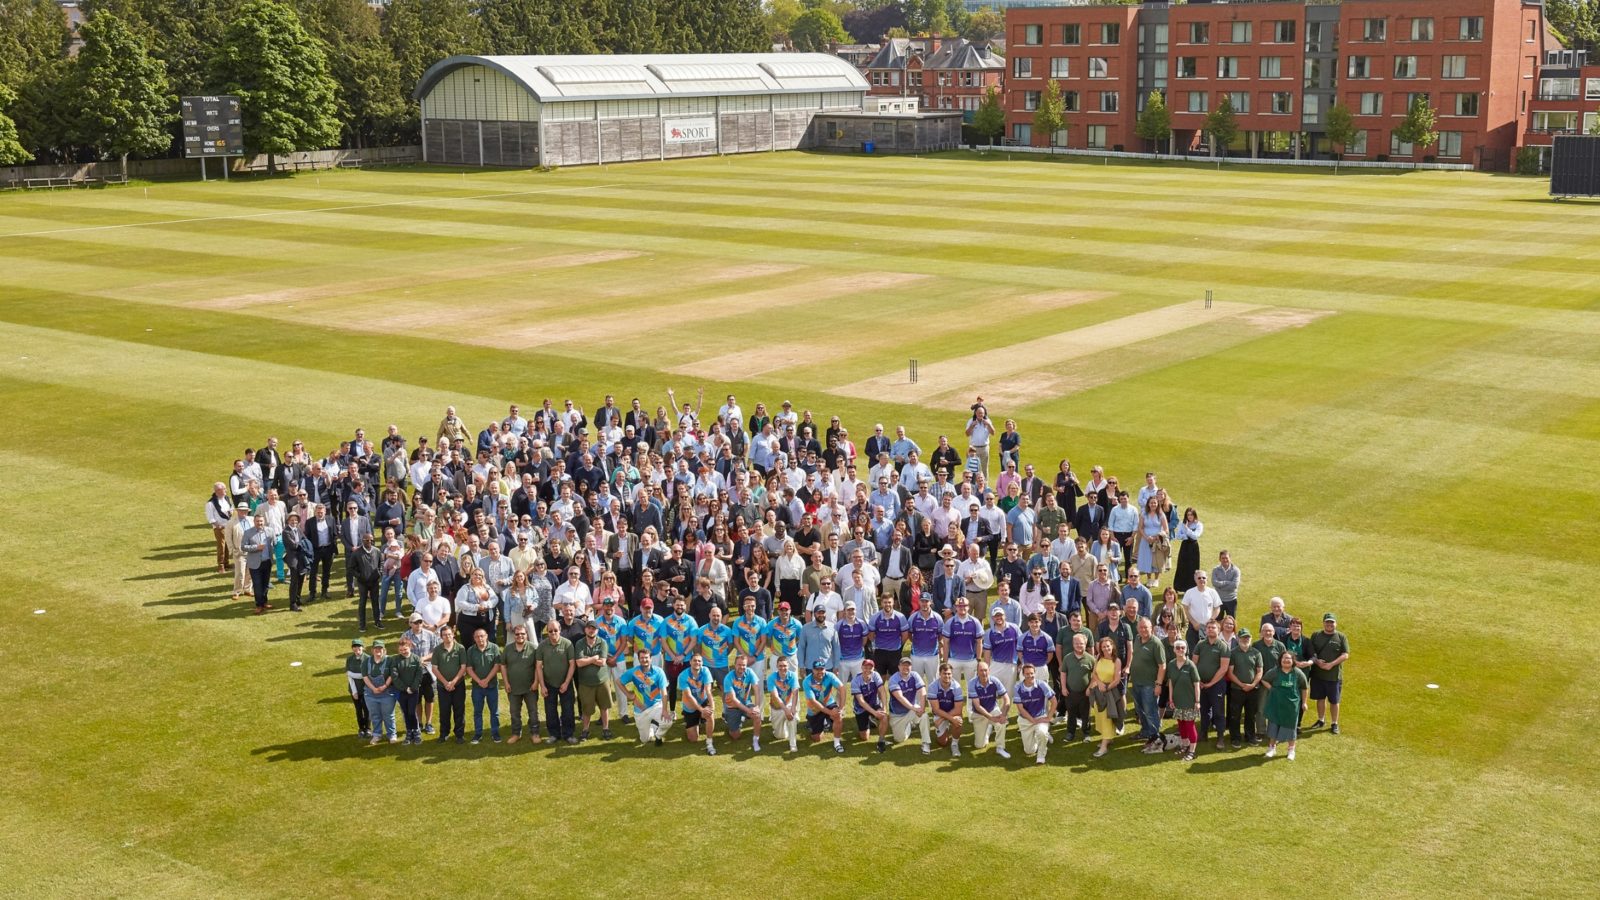 Charity cricket match set to break fundraising record